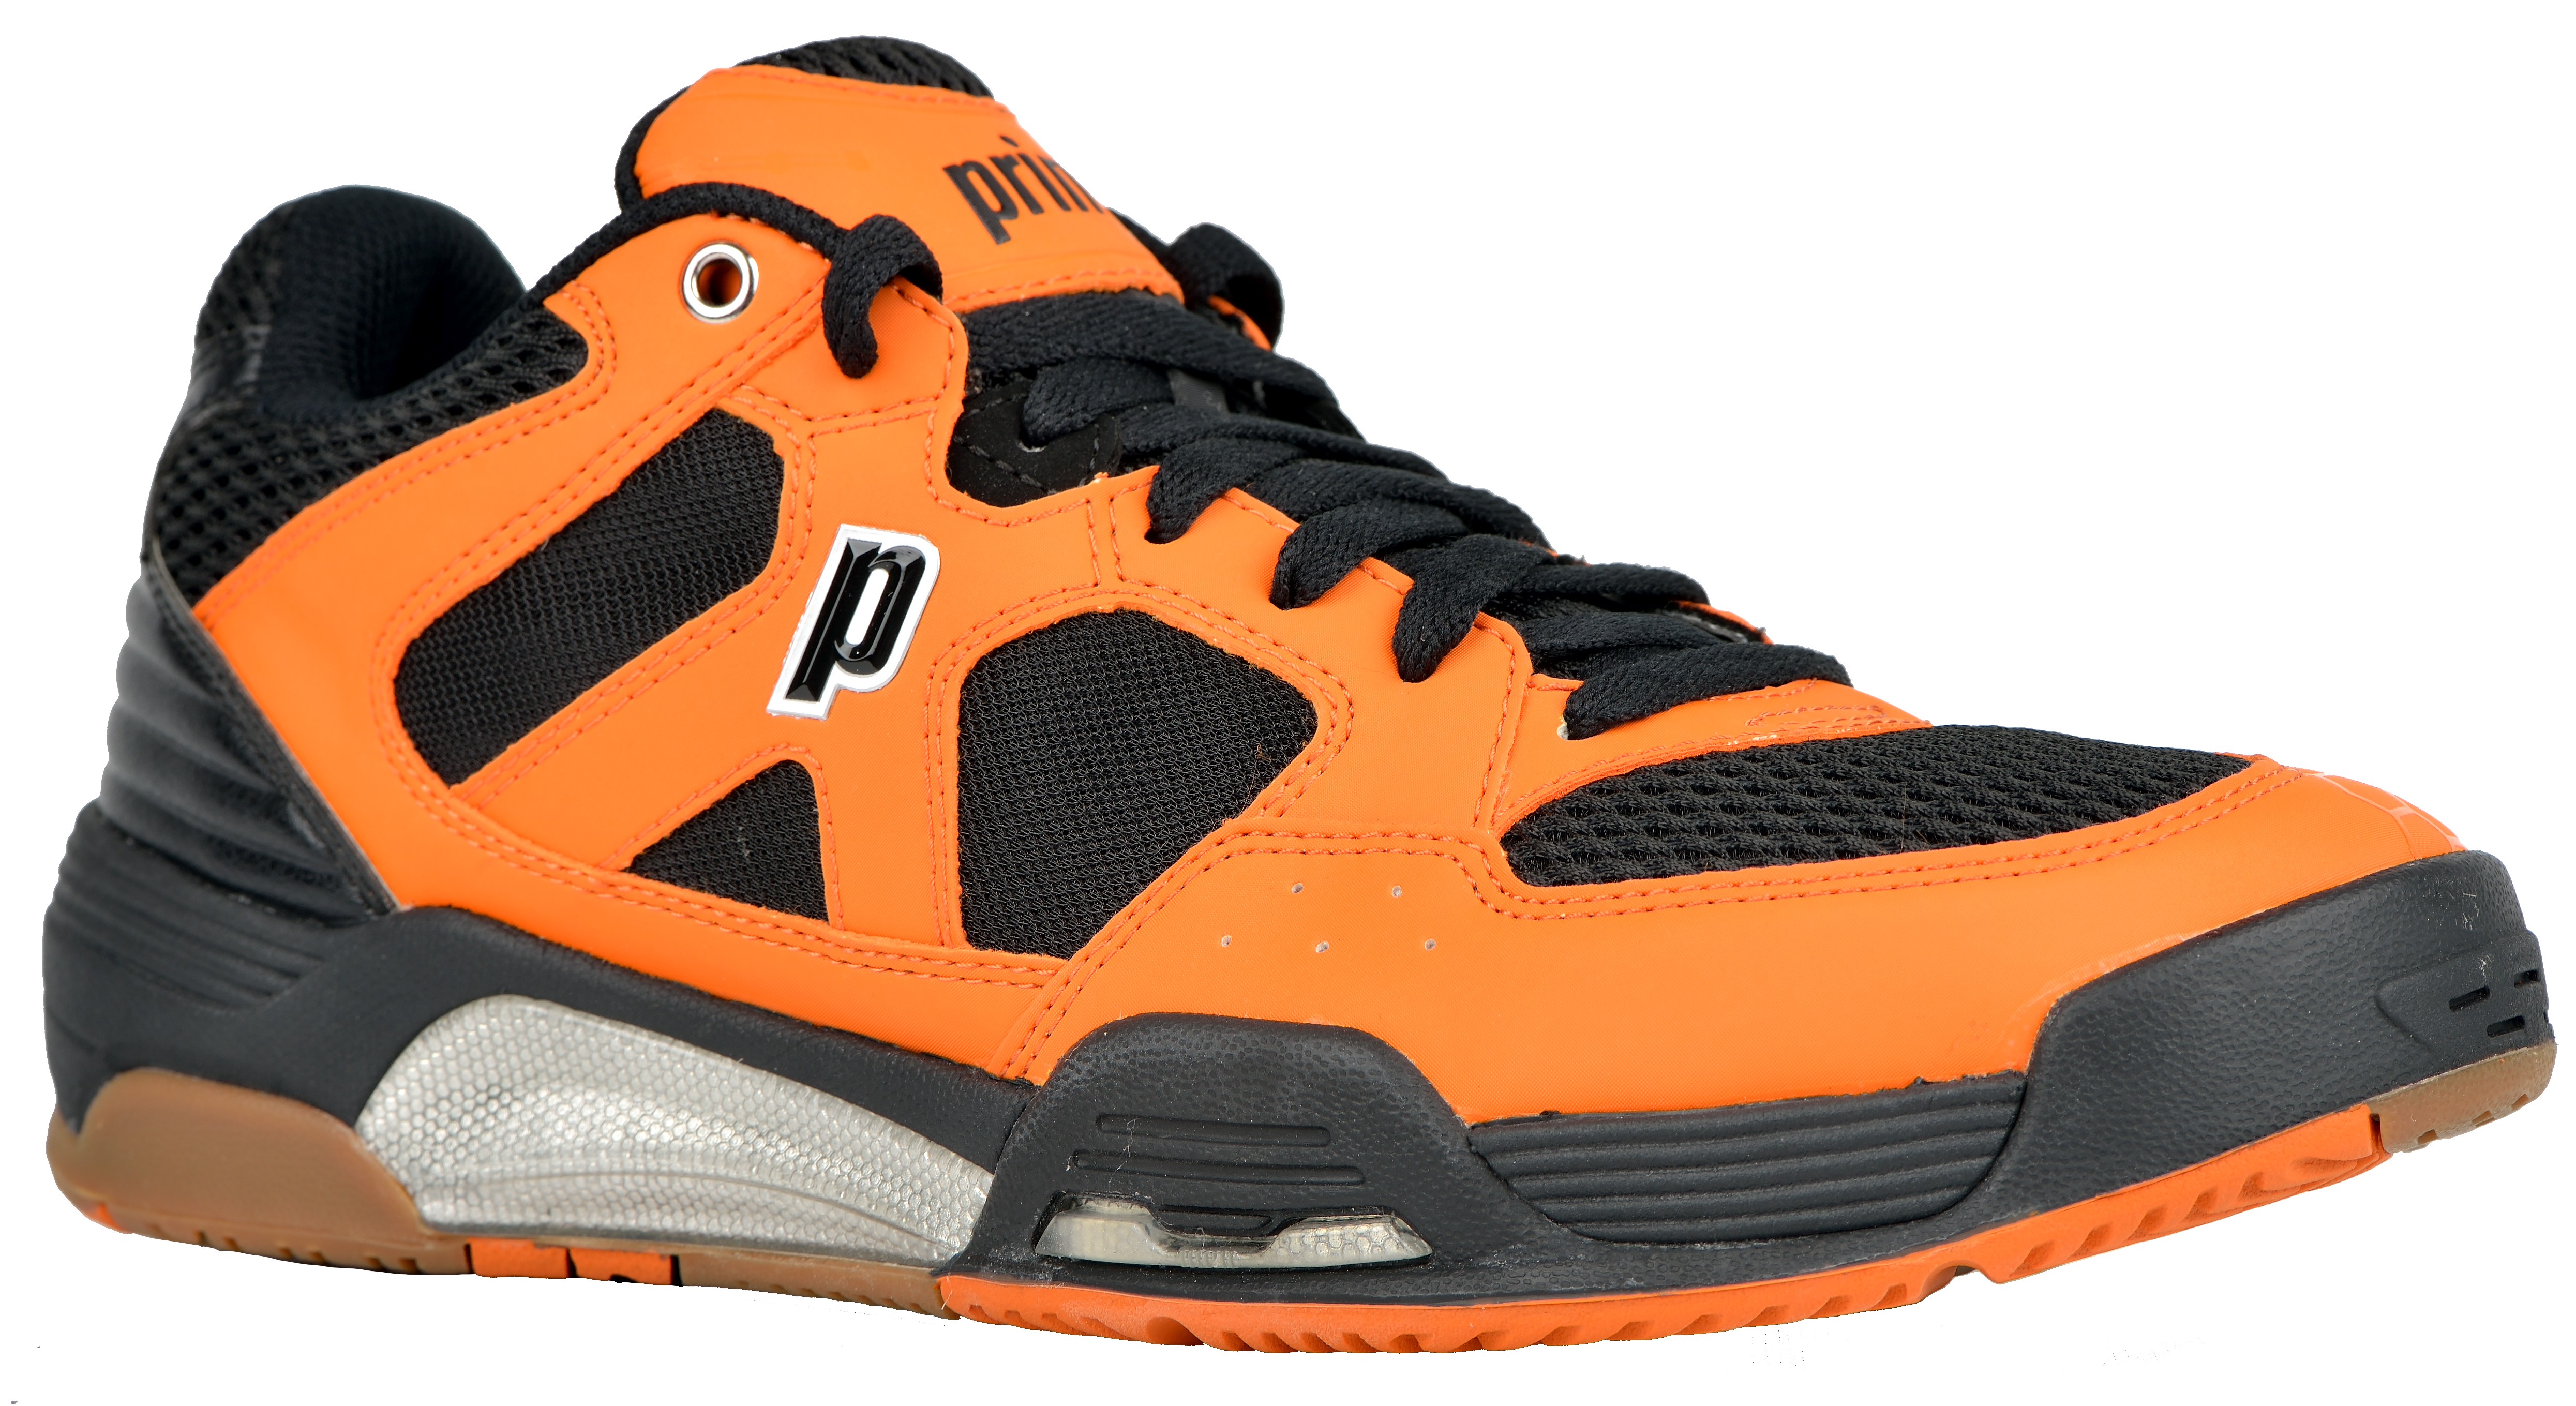 PRINCE NFS ATTACK Squash Shoes (orange/black)